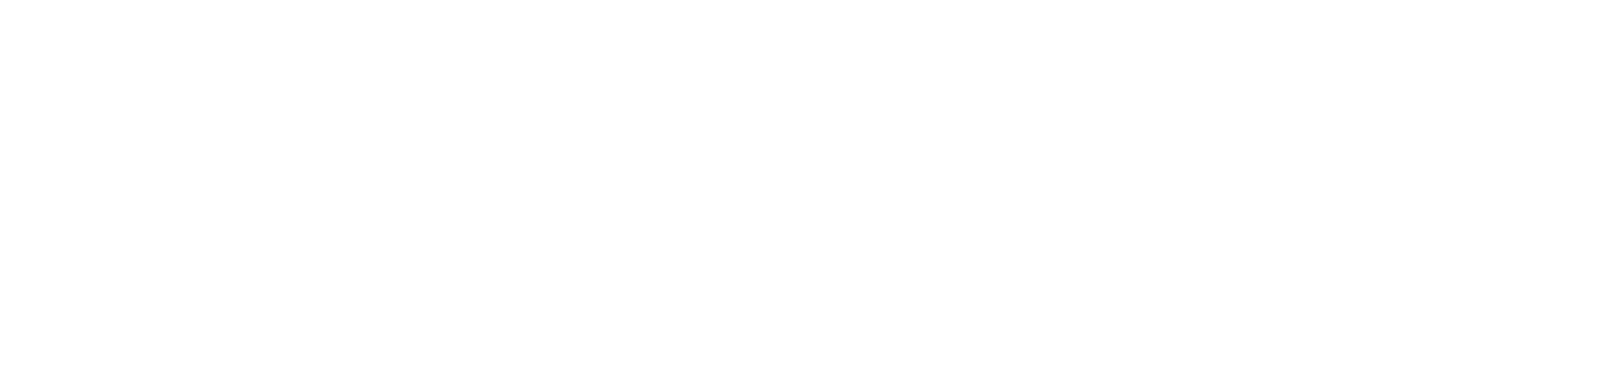 Make-A-Wish® Calendar of Wishes